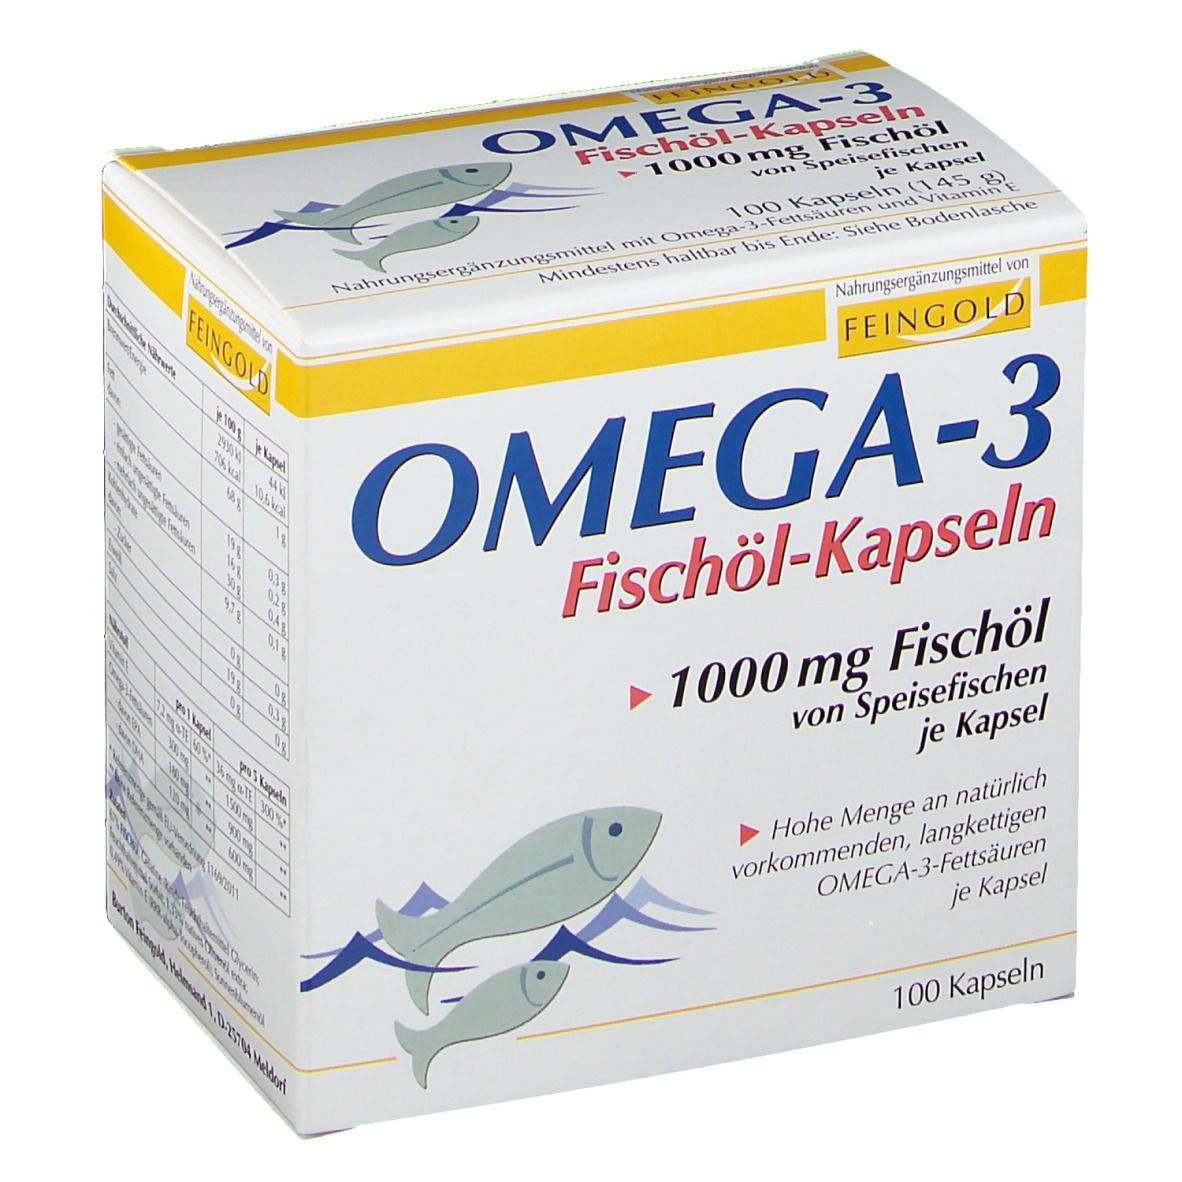 Image of Omega-3 Fischöl-Kapseln